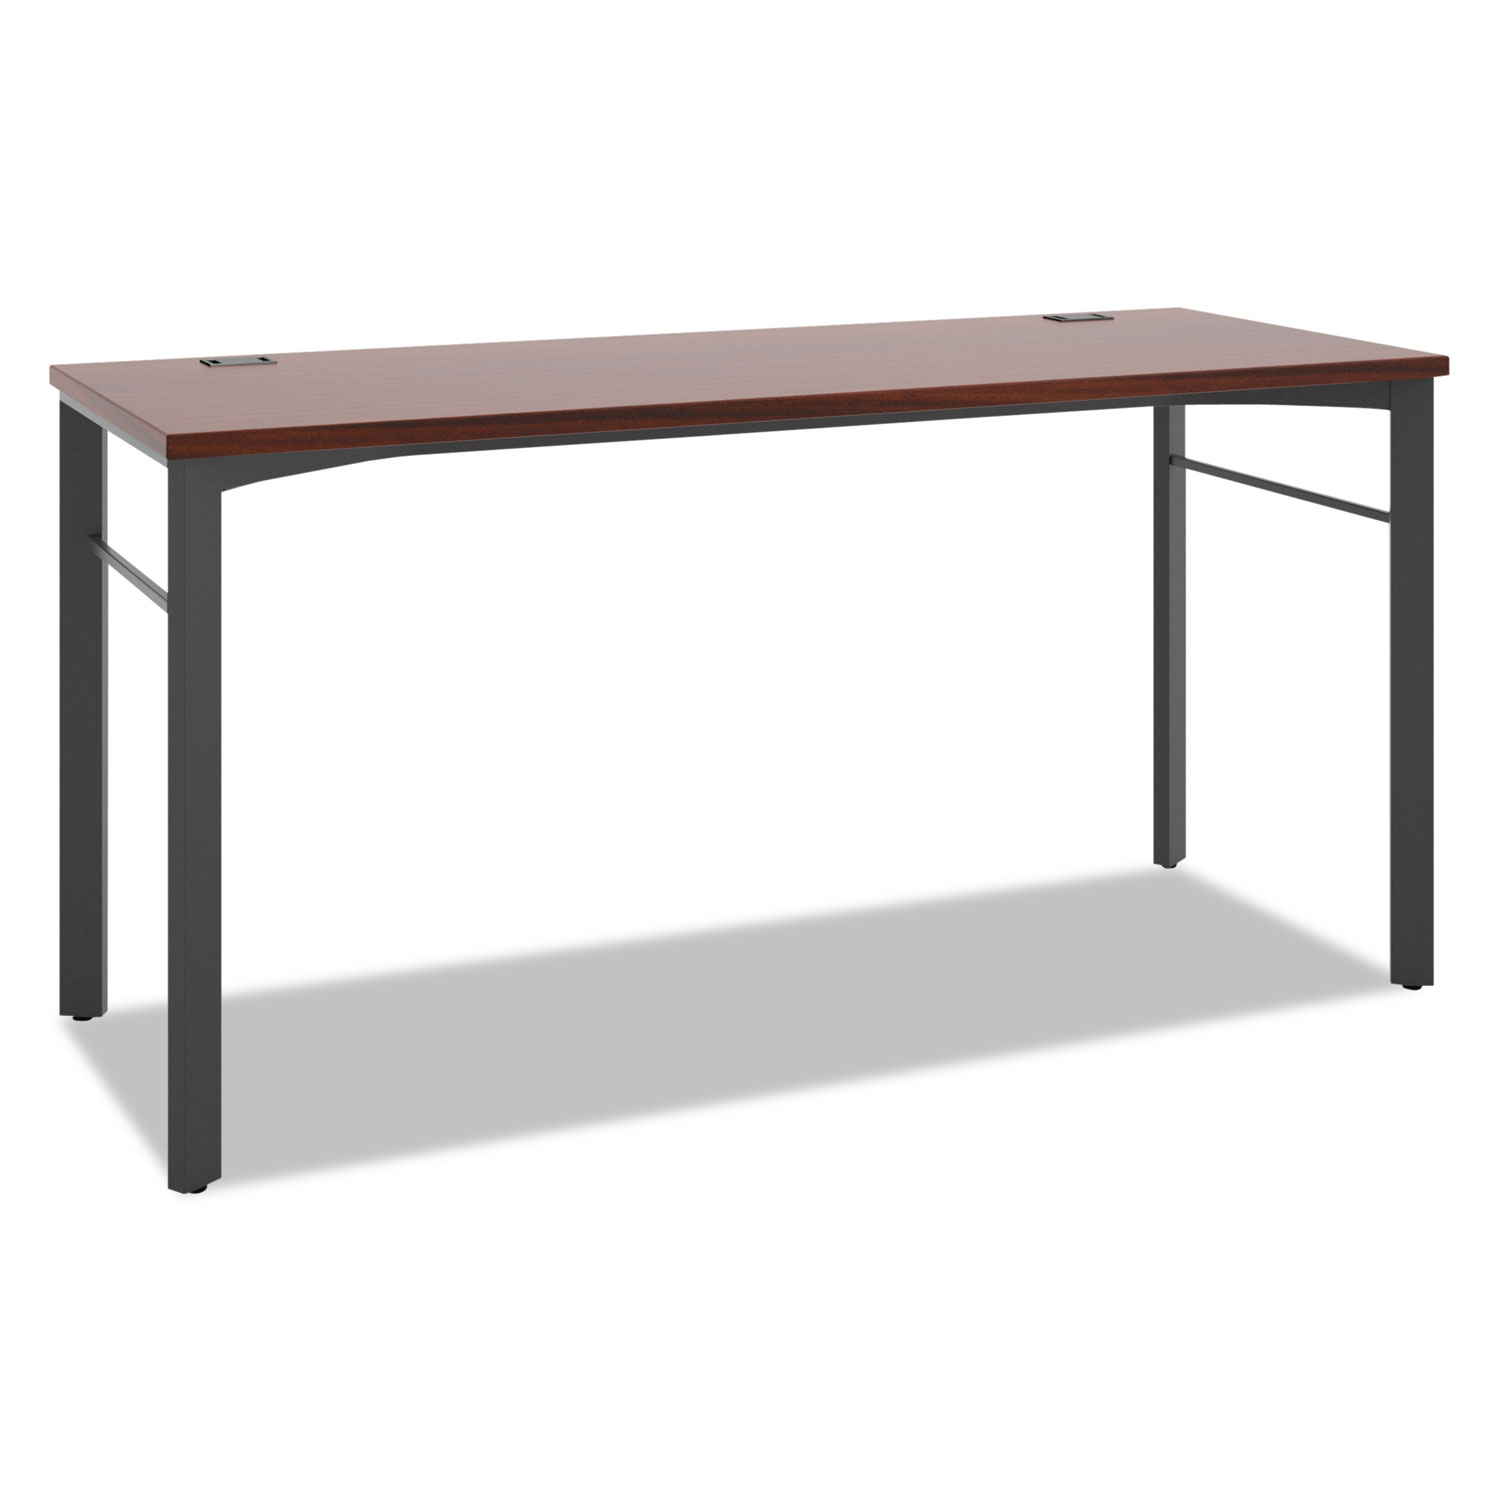  HON BSXMLD60C Manage Series Desk Table, 60w x 23.5d x 29.5h, Chestnut (BSXMLD60C) 